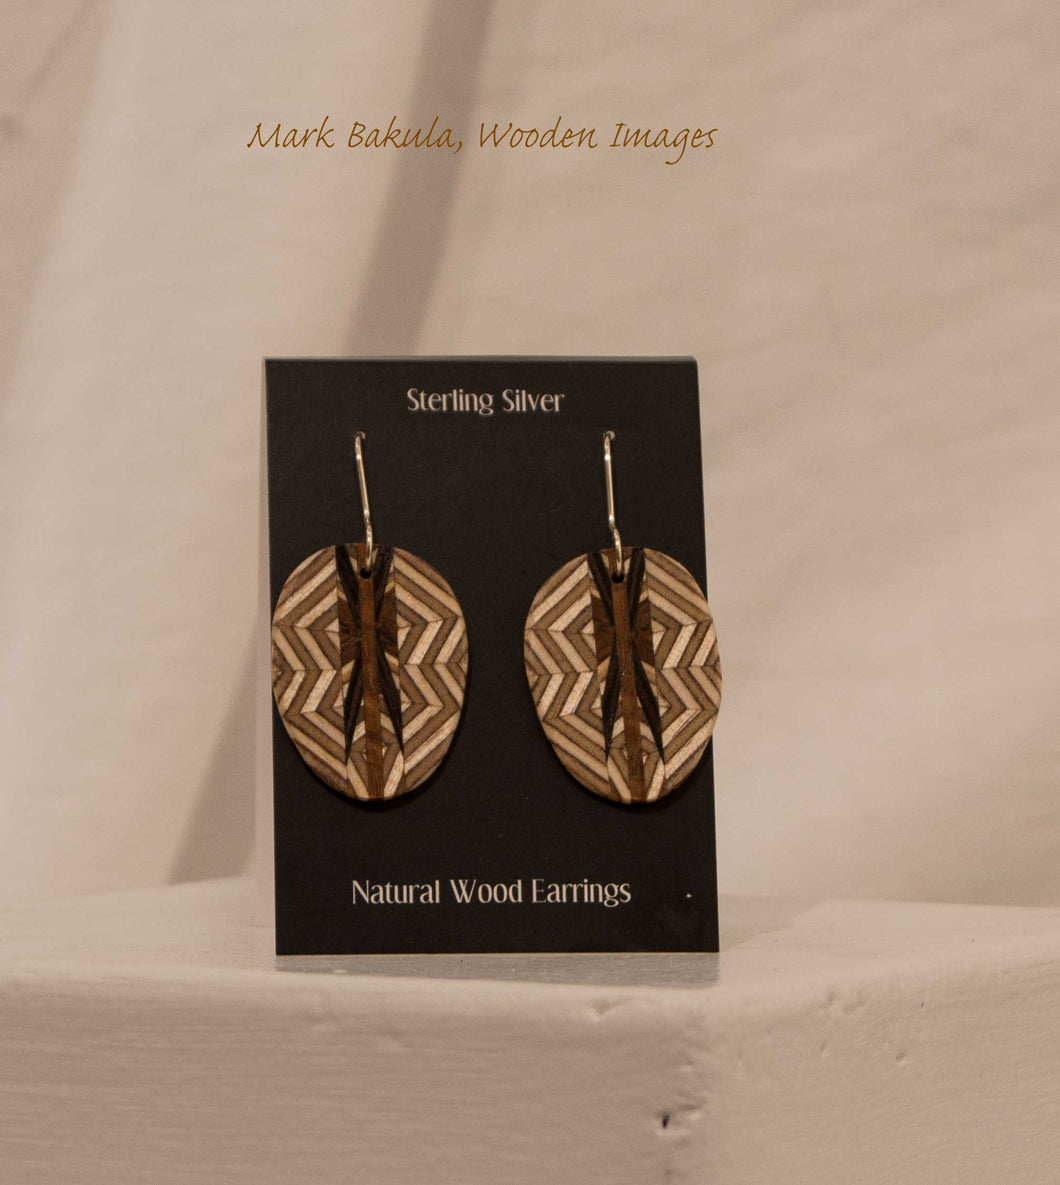 Wooden Inlay Earrings, Mark Bakula #31Jewelry